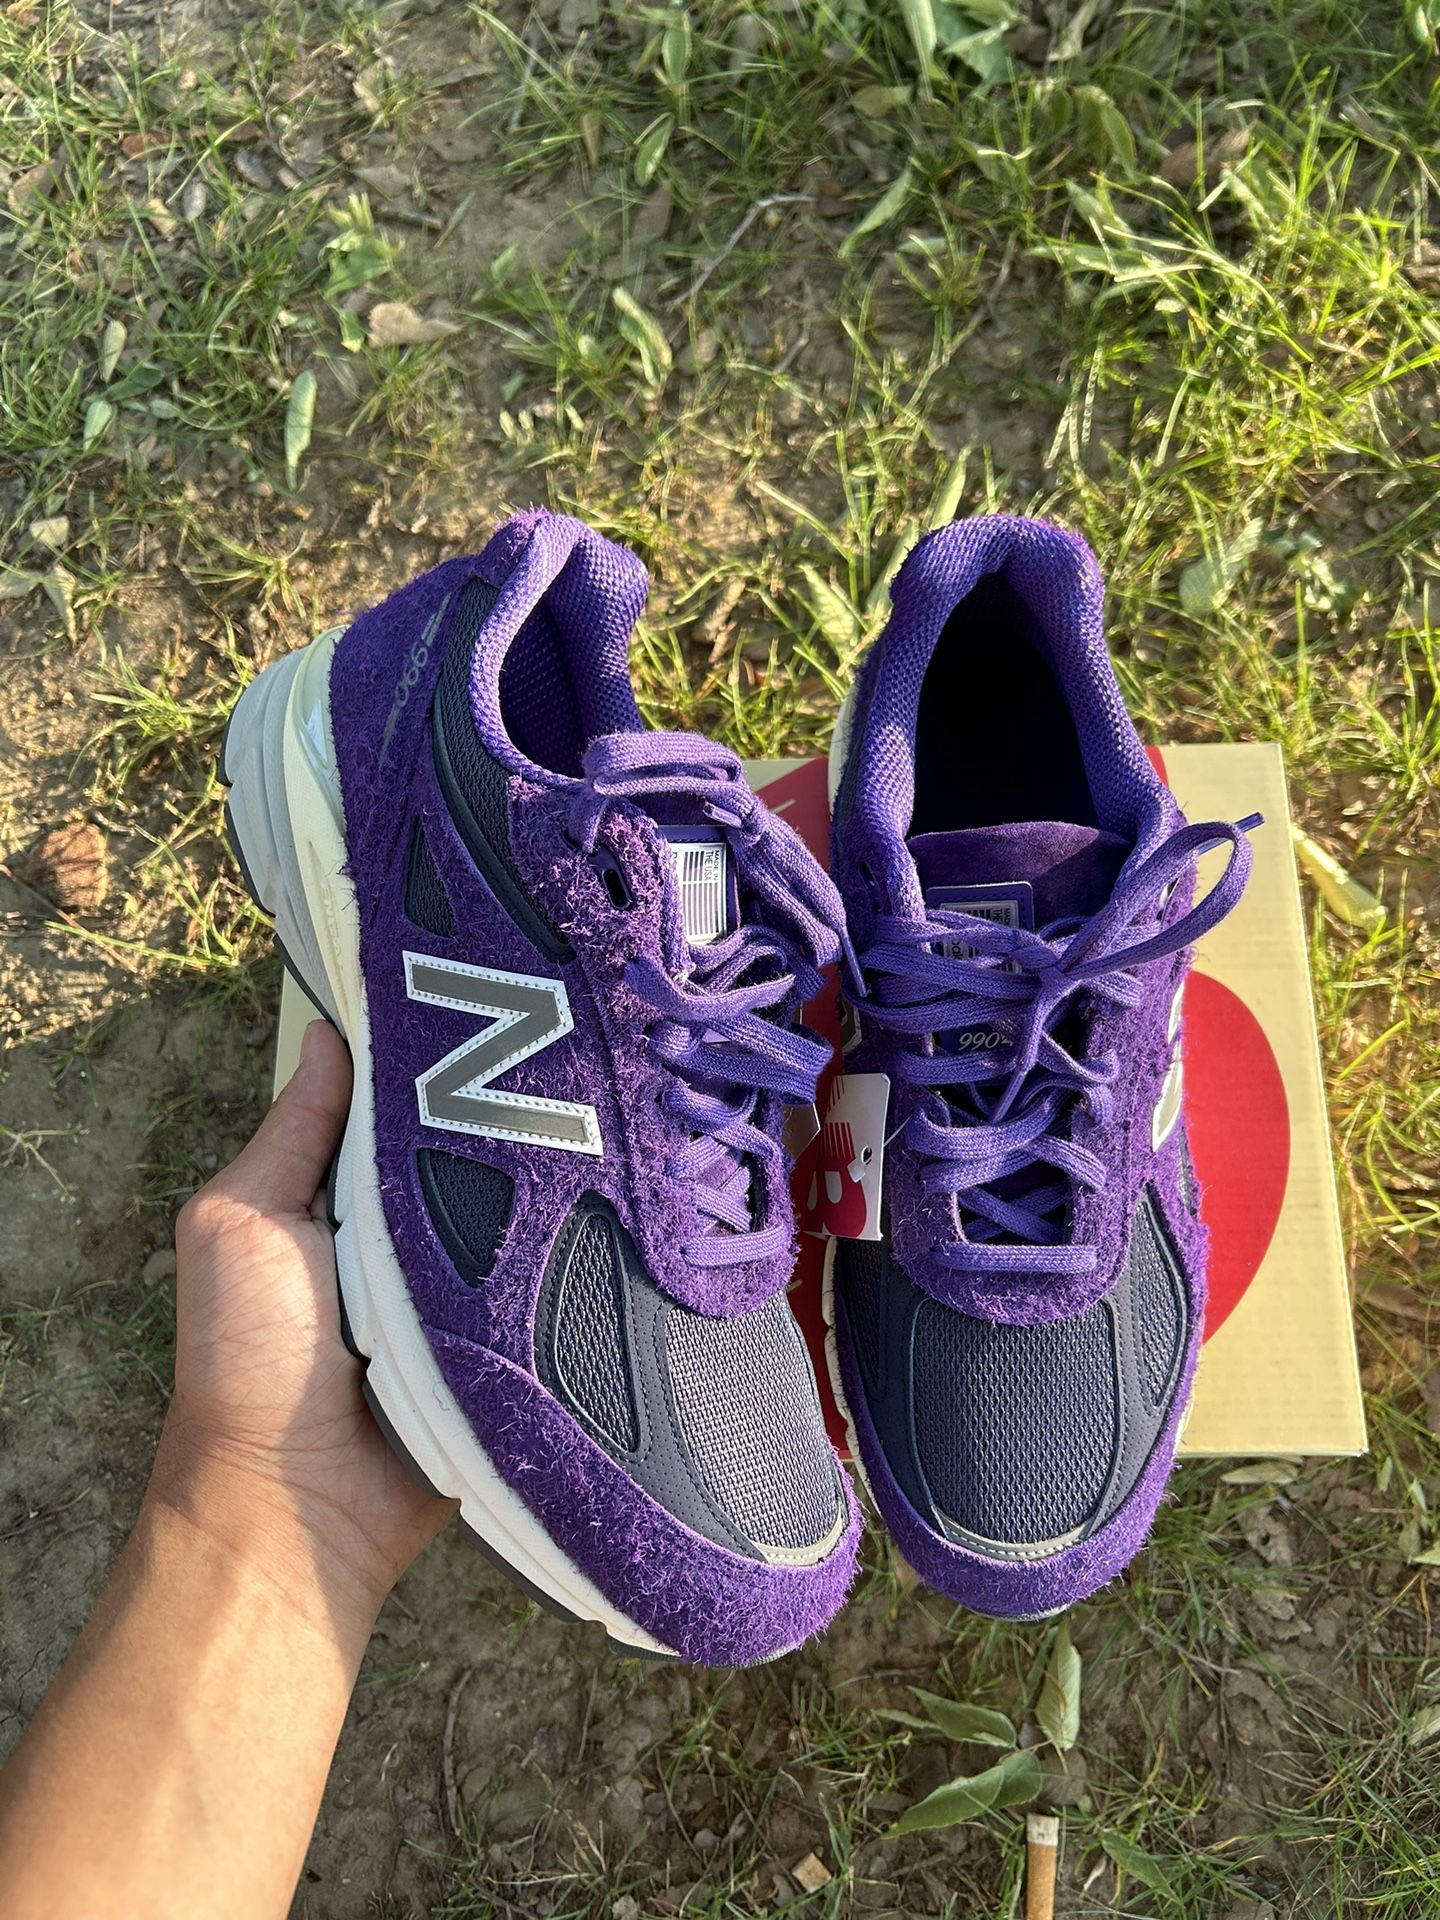 Purple New Balances Size 10.5